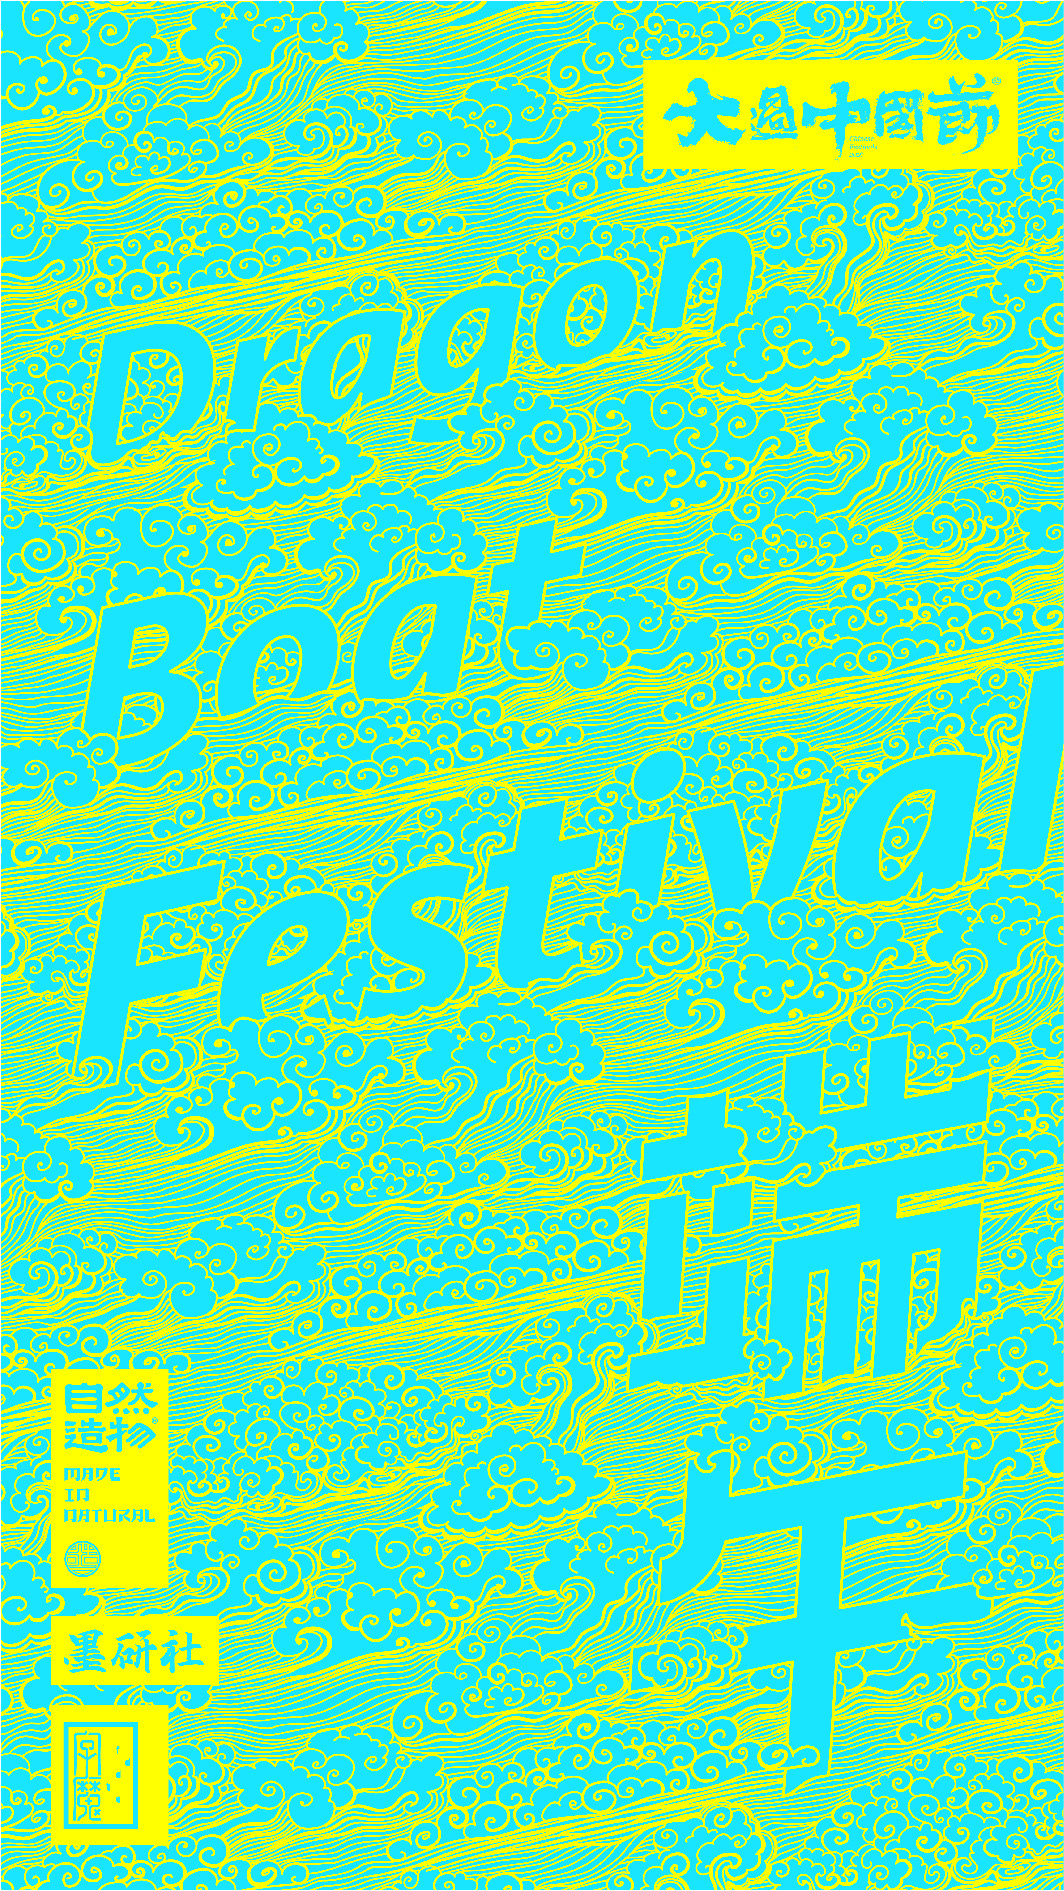 typeface design Poster Design Typeface posters chinese festival dragon boat festival Mid-Autumn Festival 端午节 中秋节 Lion Dance